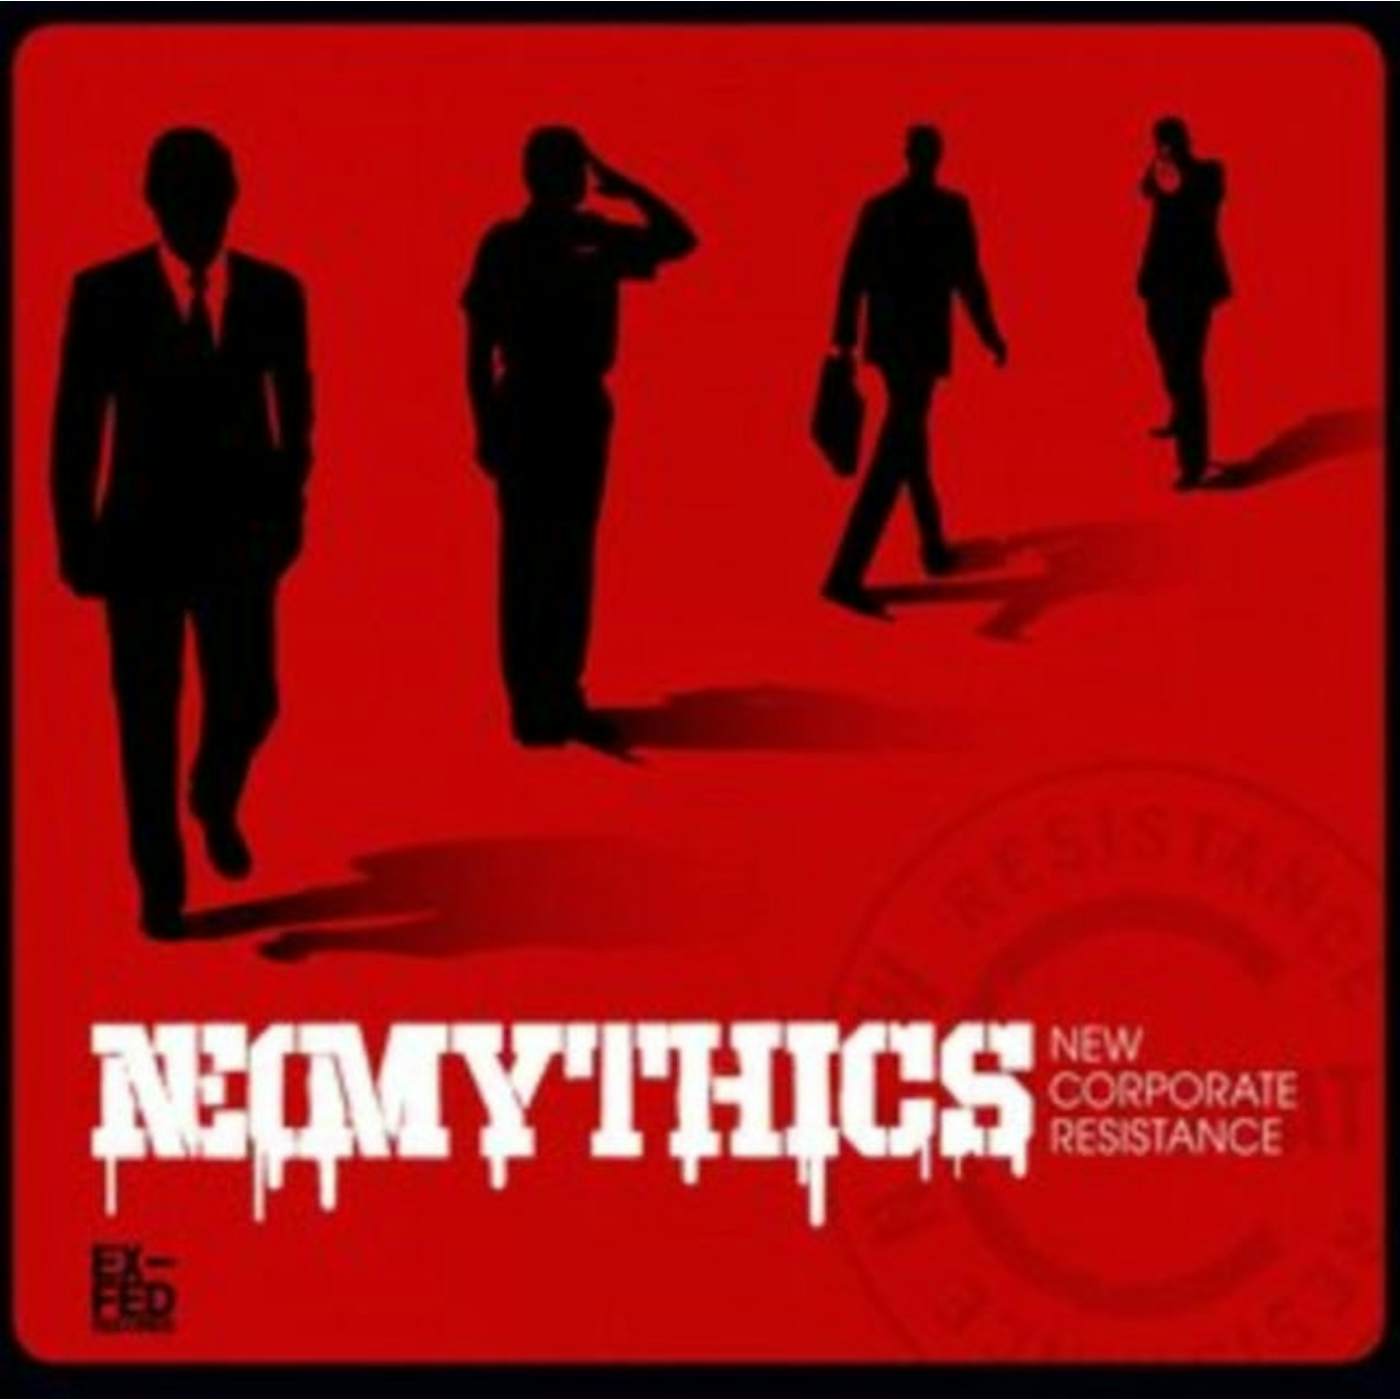 Neomythics CD - New Corporatee Resistances